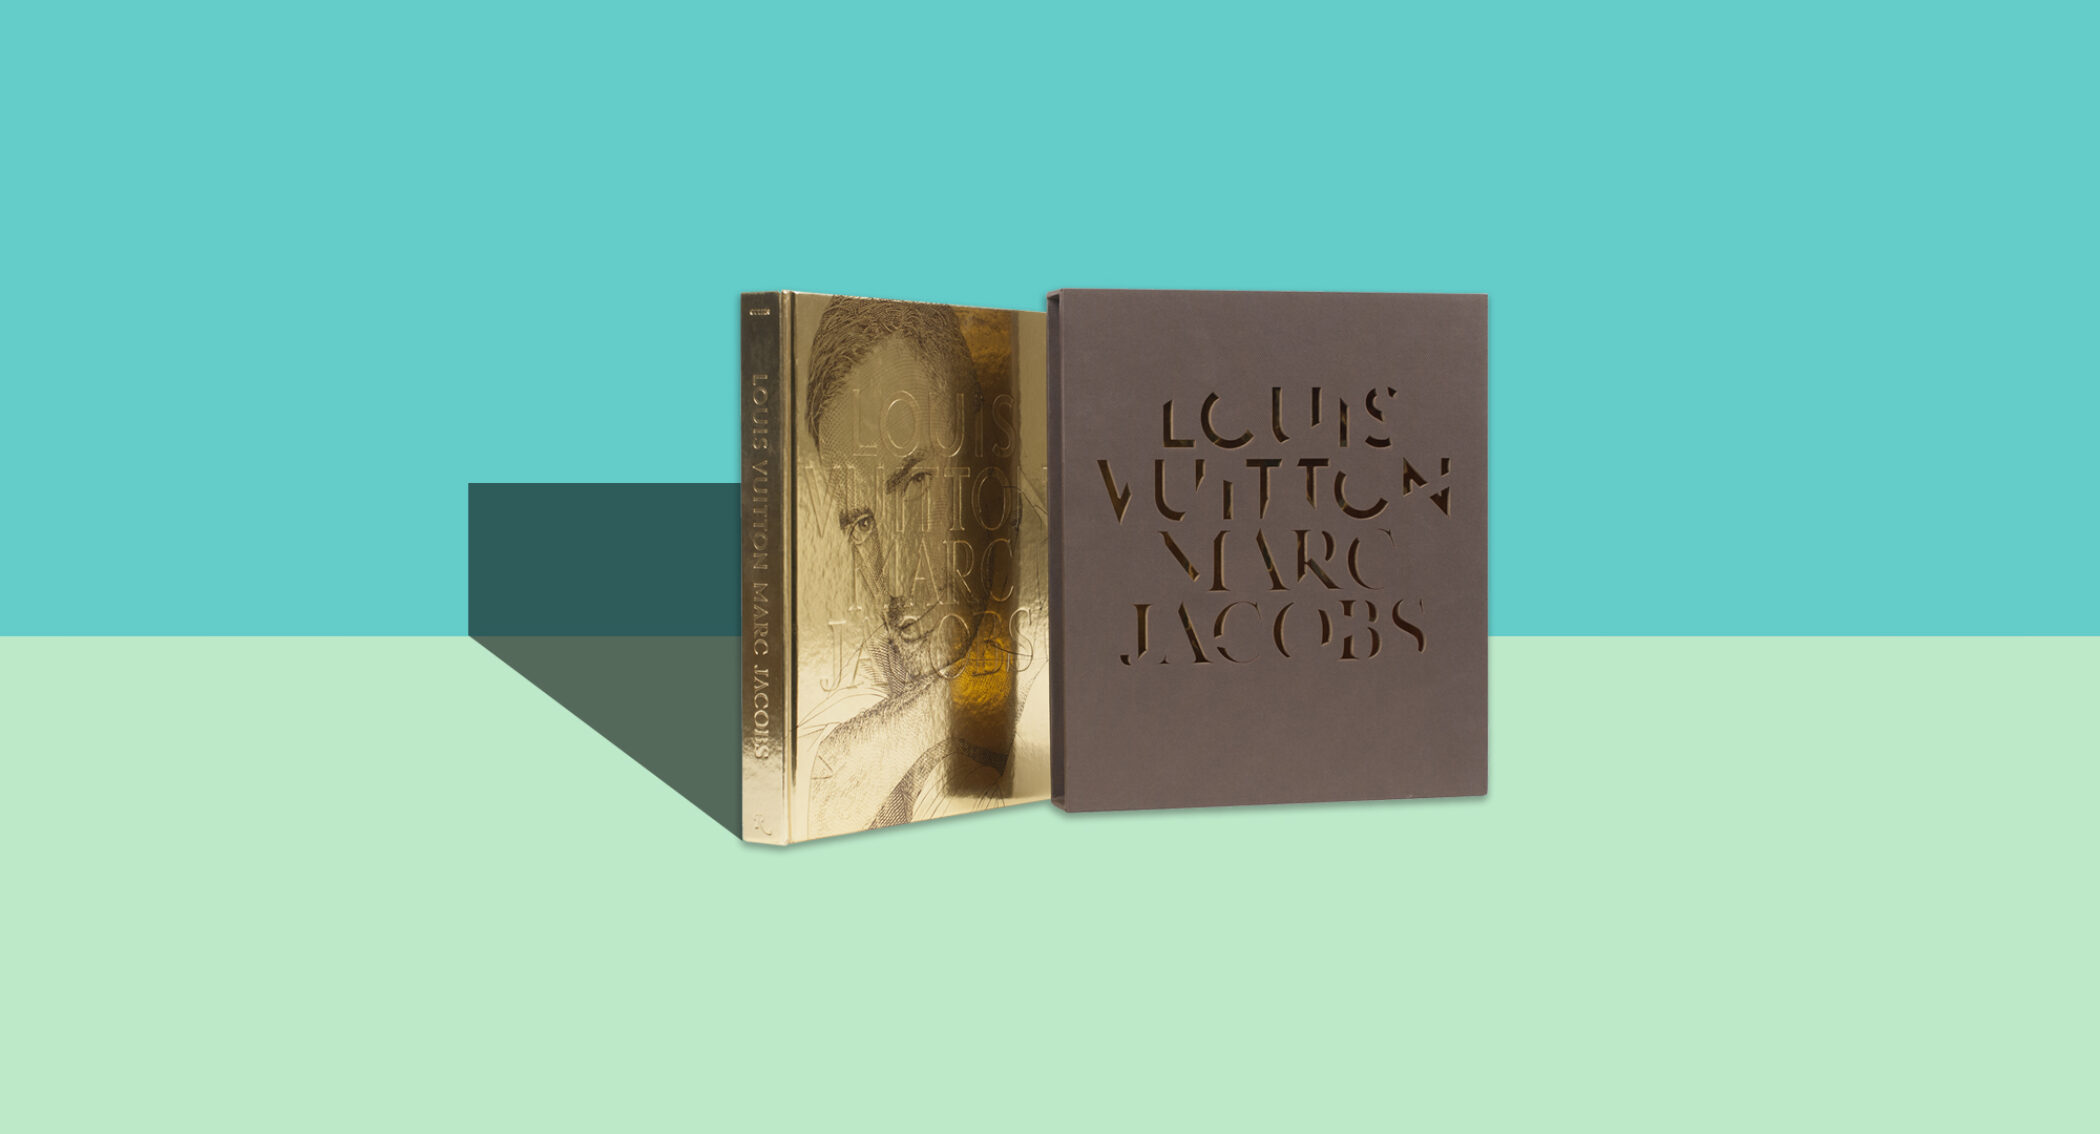 Marc Jacobs book for Louis Vuitton